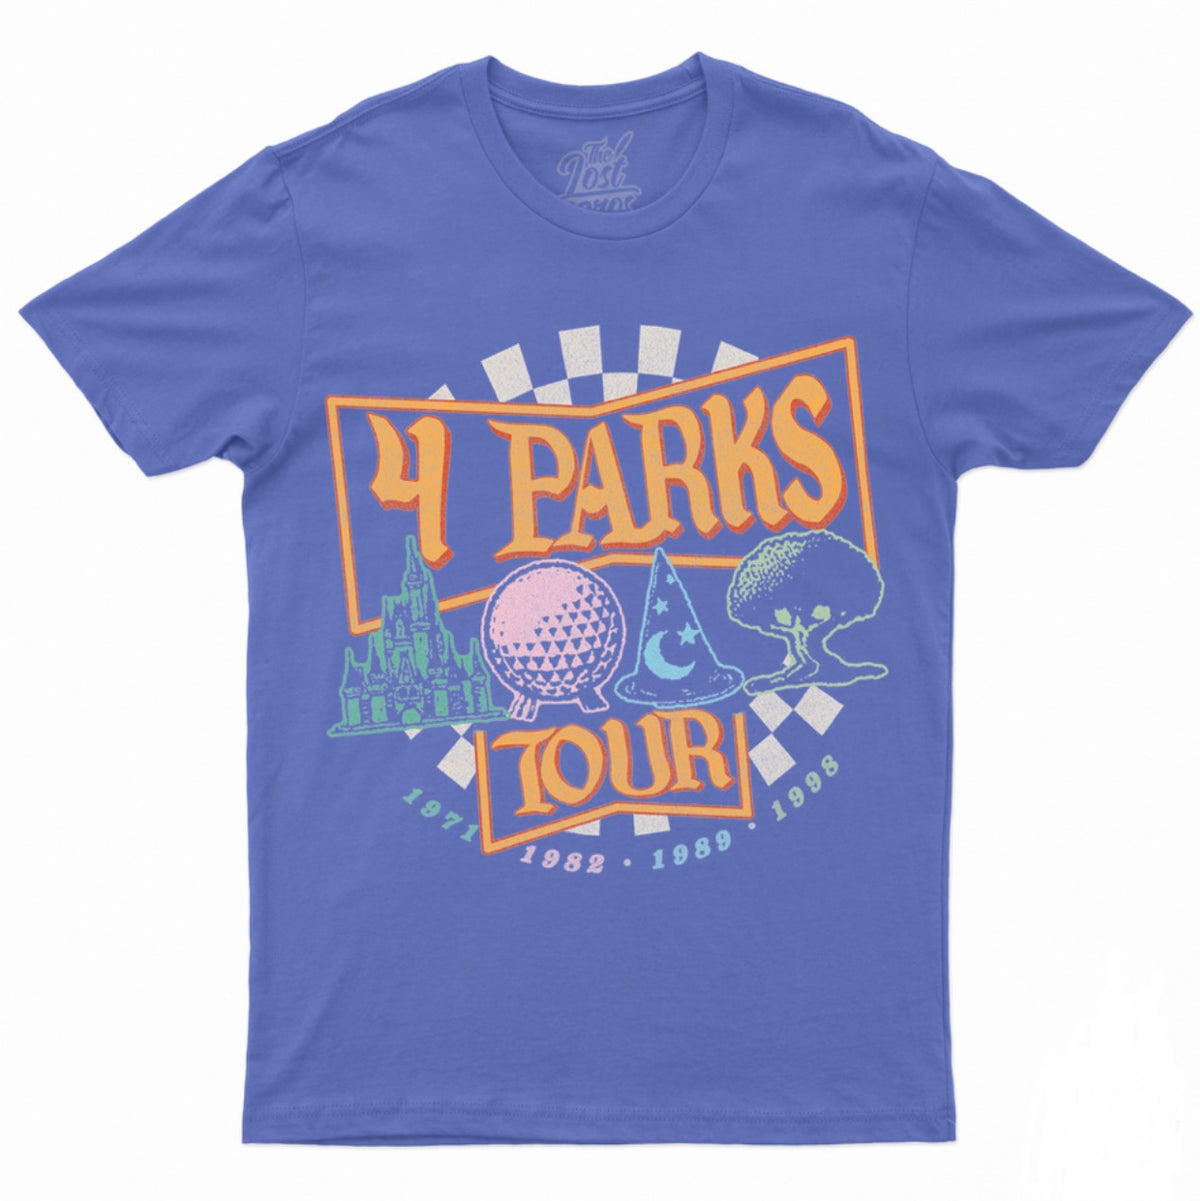 4 Parks Tour Tee - Periwinkle